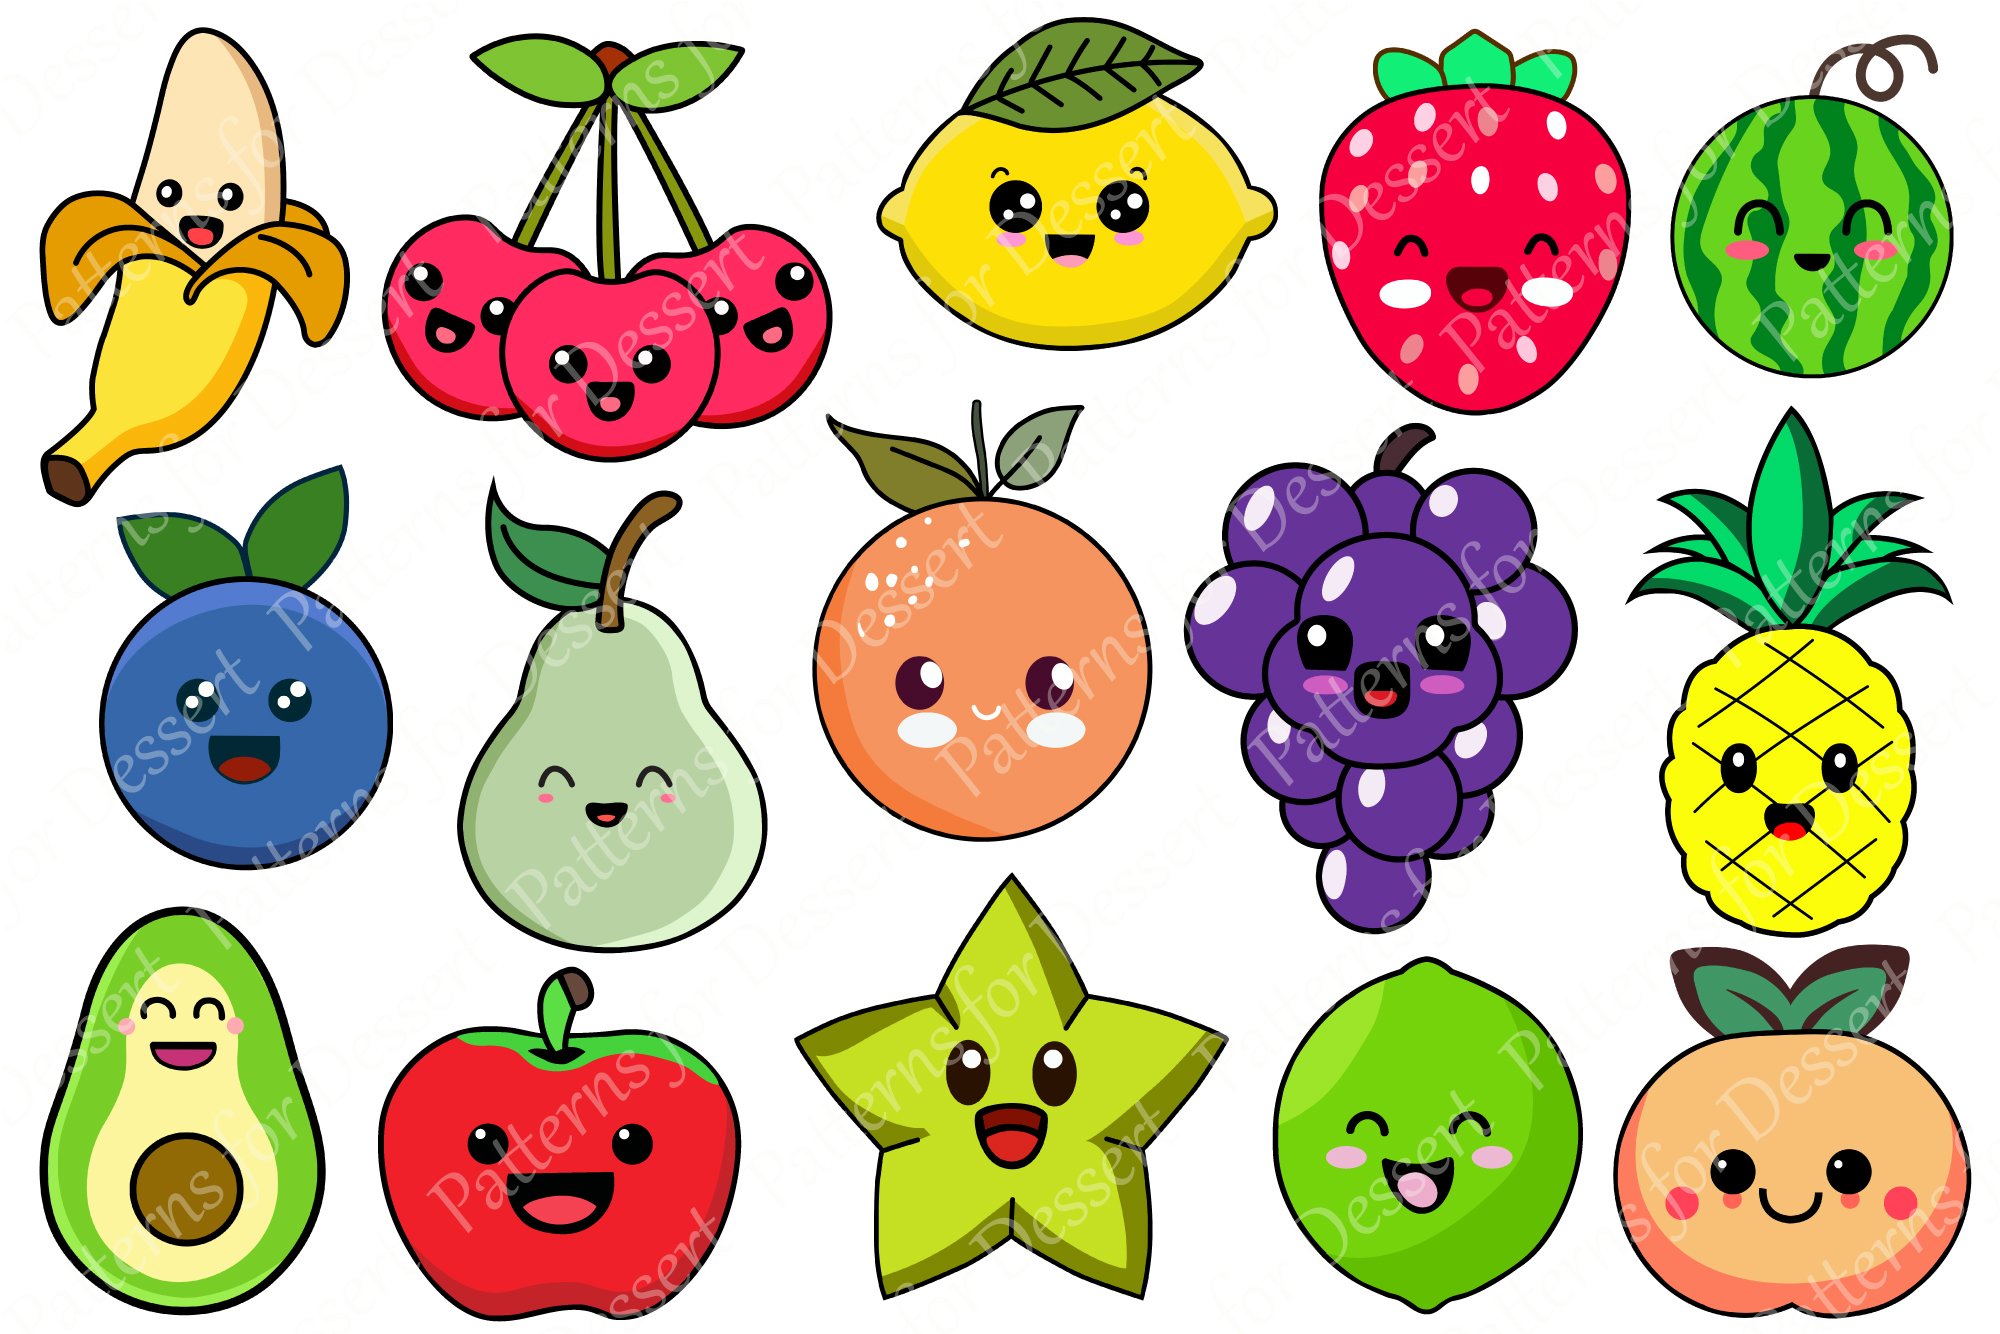 Cute Kawaii Fruit Clip Art cover image.